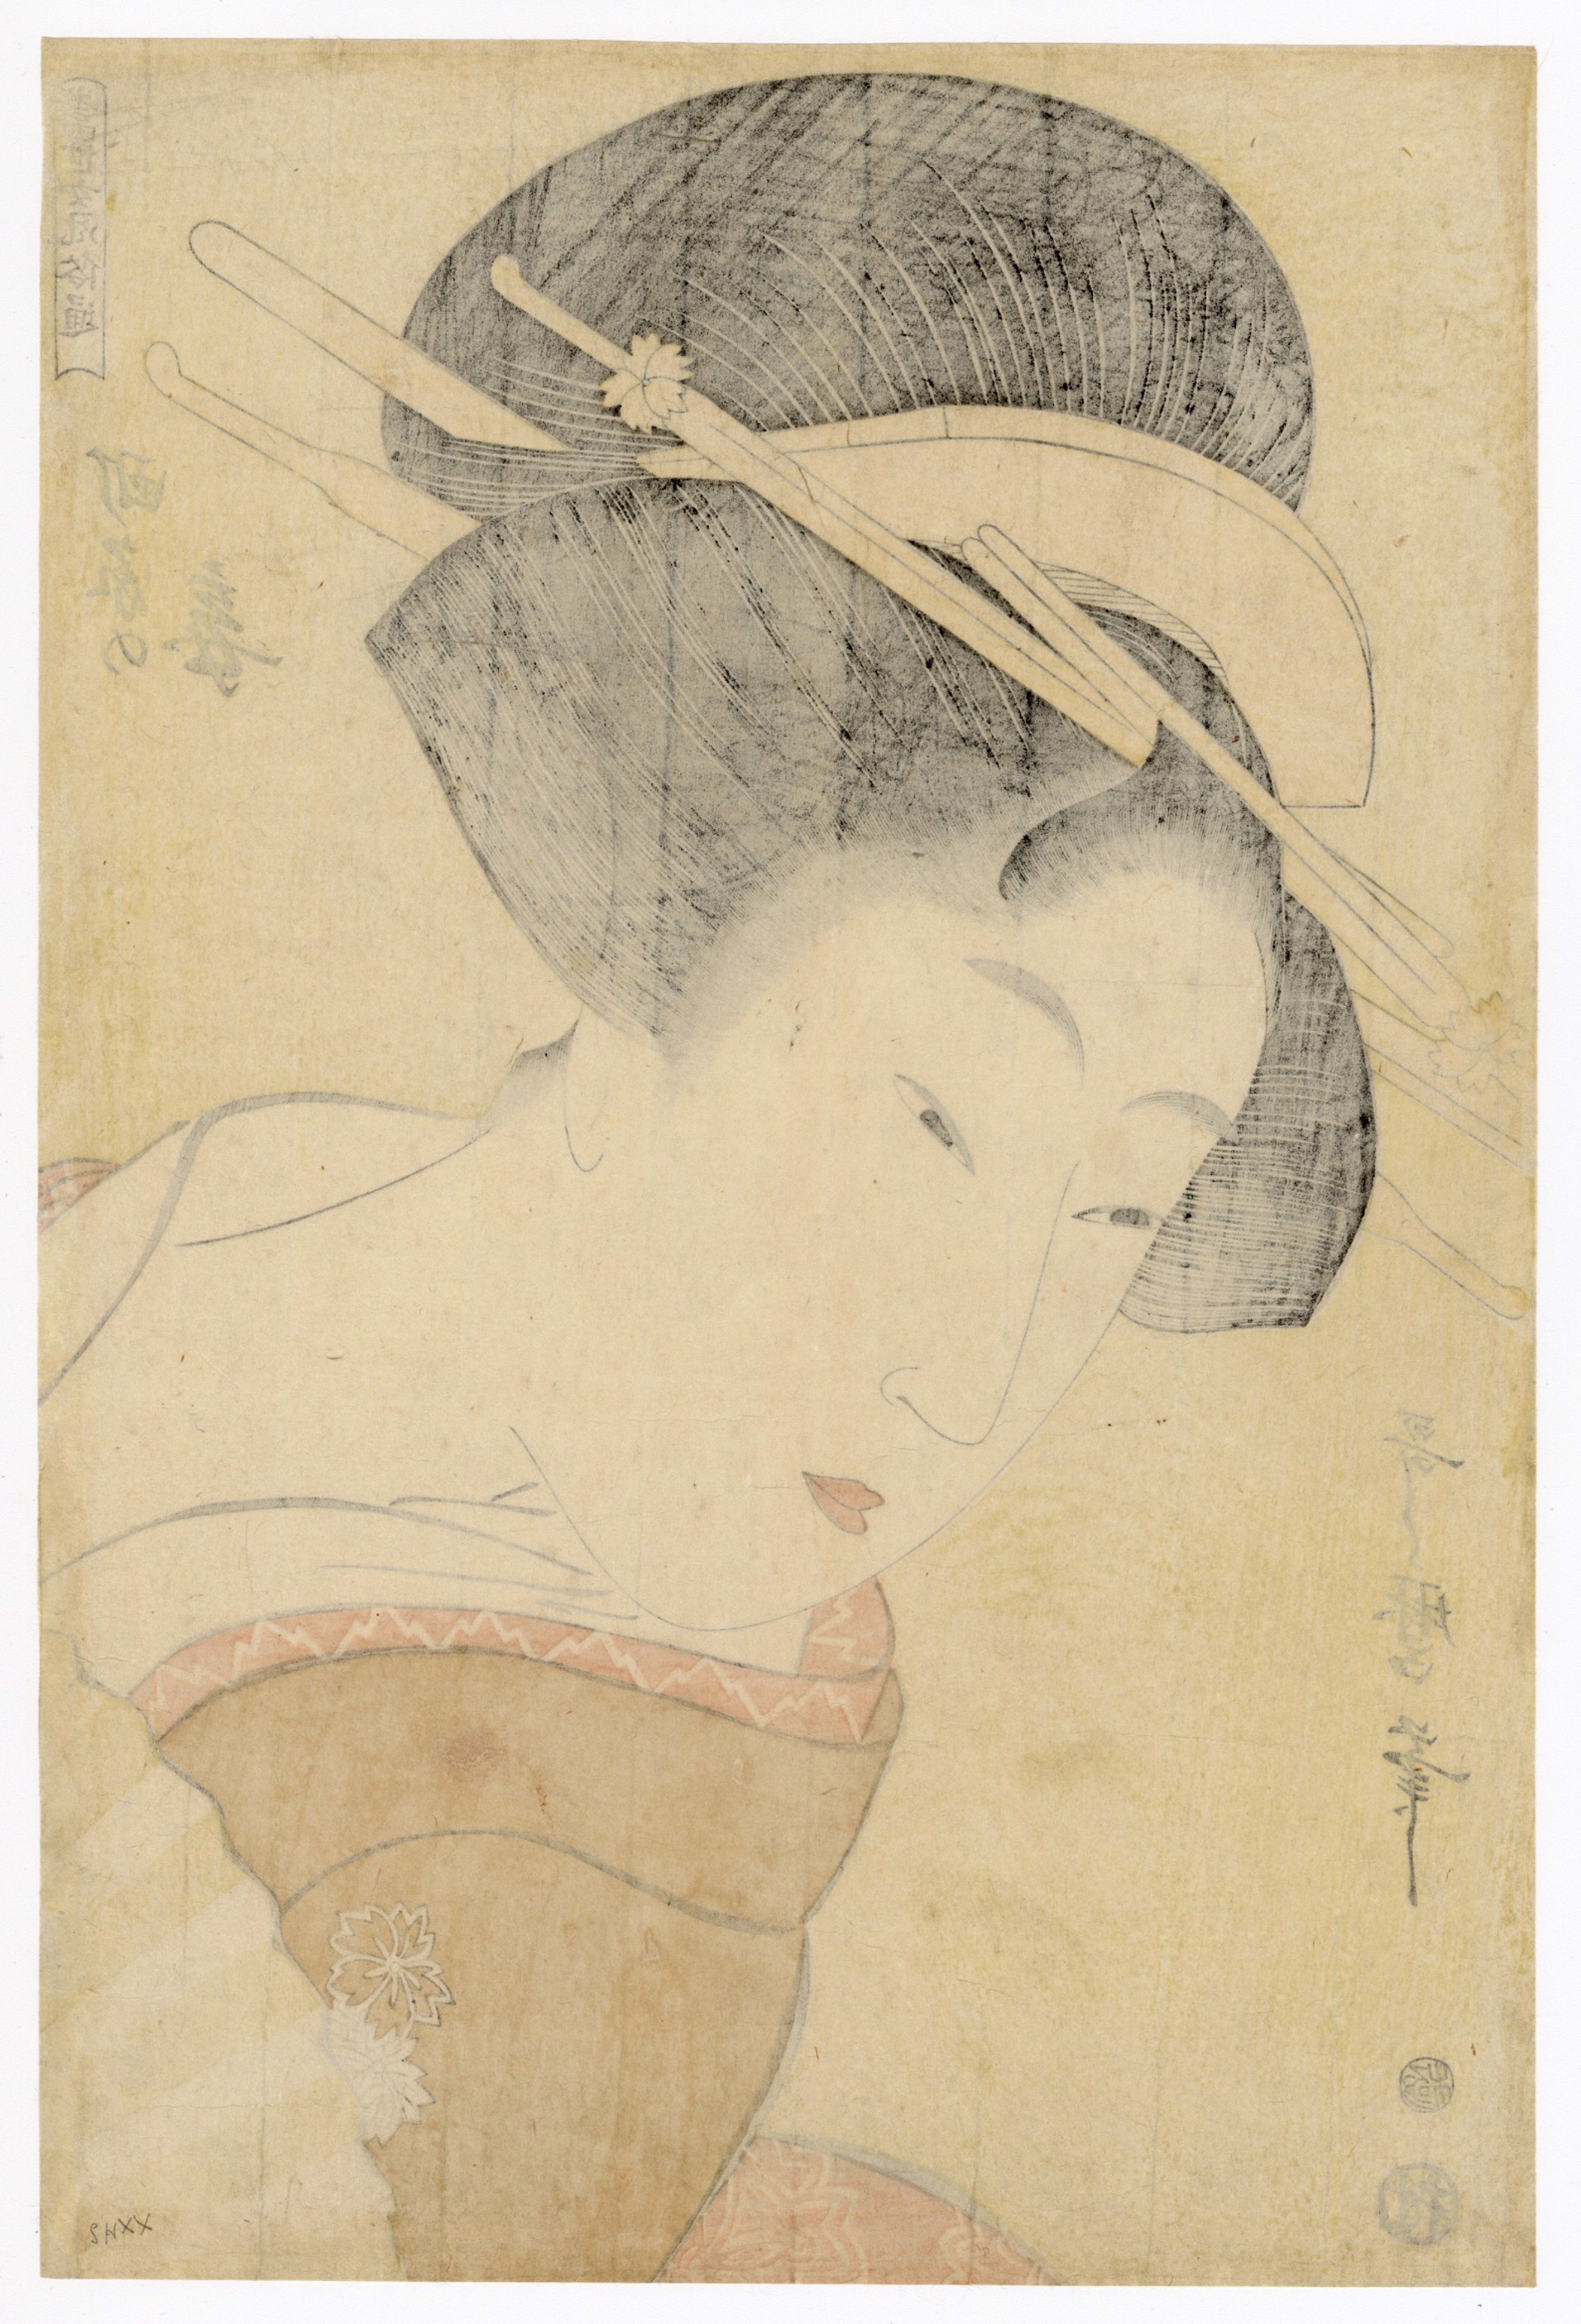 Mistress of a townsman by Utamaro